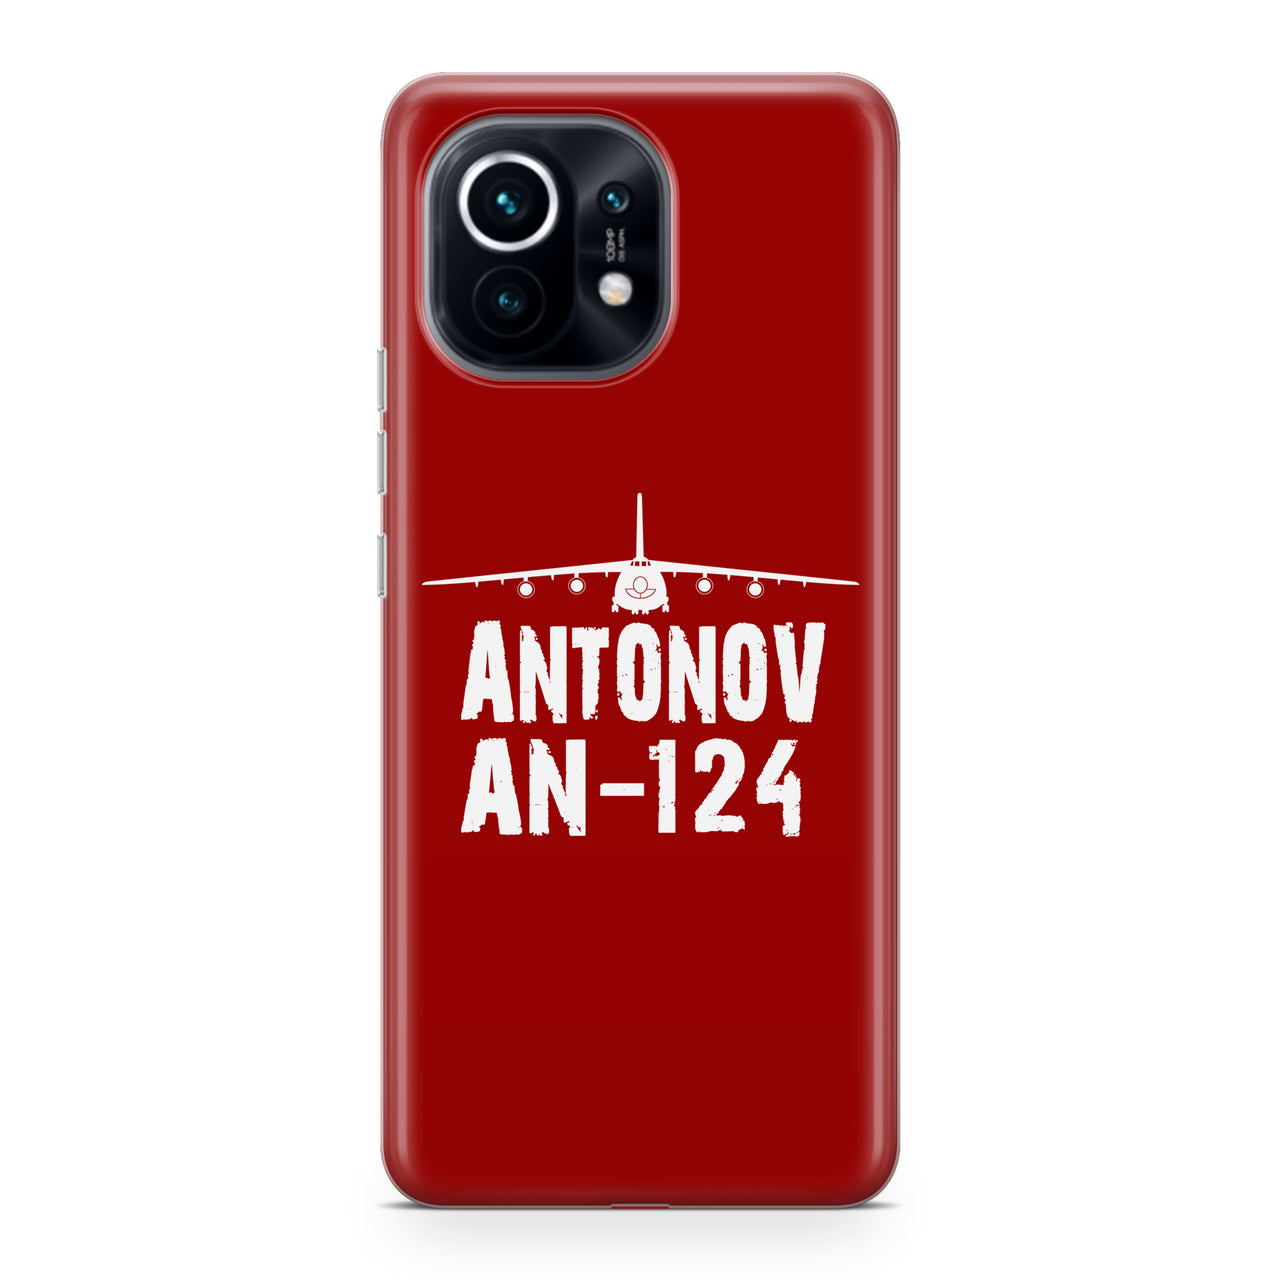 Antonov AN-124 & Plane Designed Xiaomi Cases